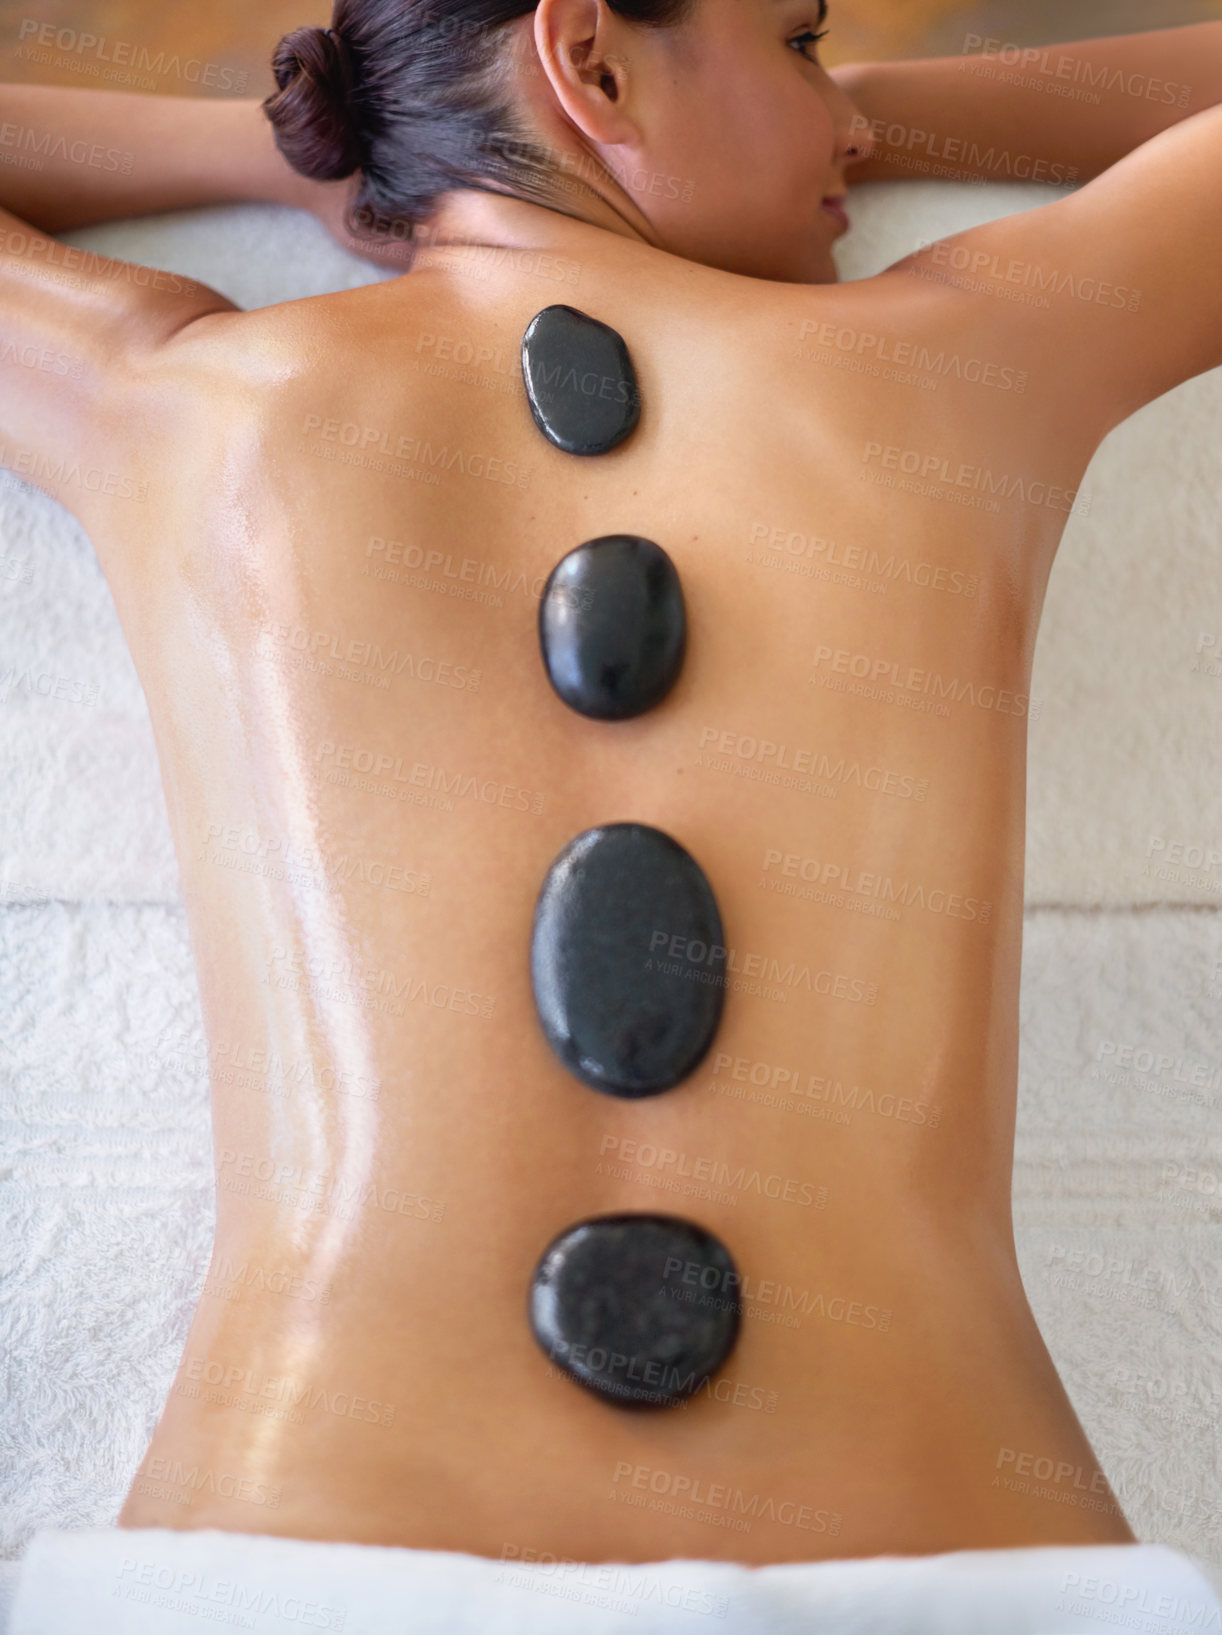 Buy stock photo Shot of a young woman enjoying a hot stone massage at a spa